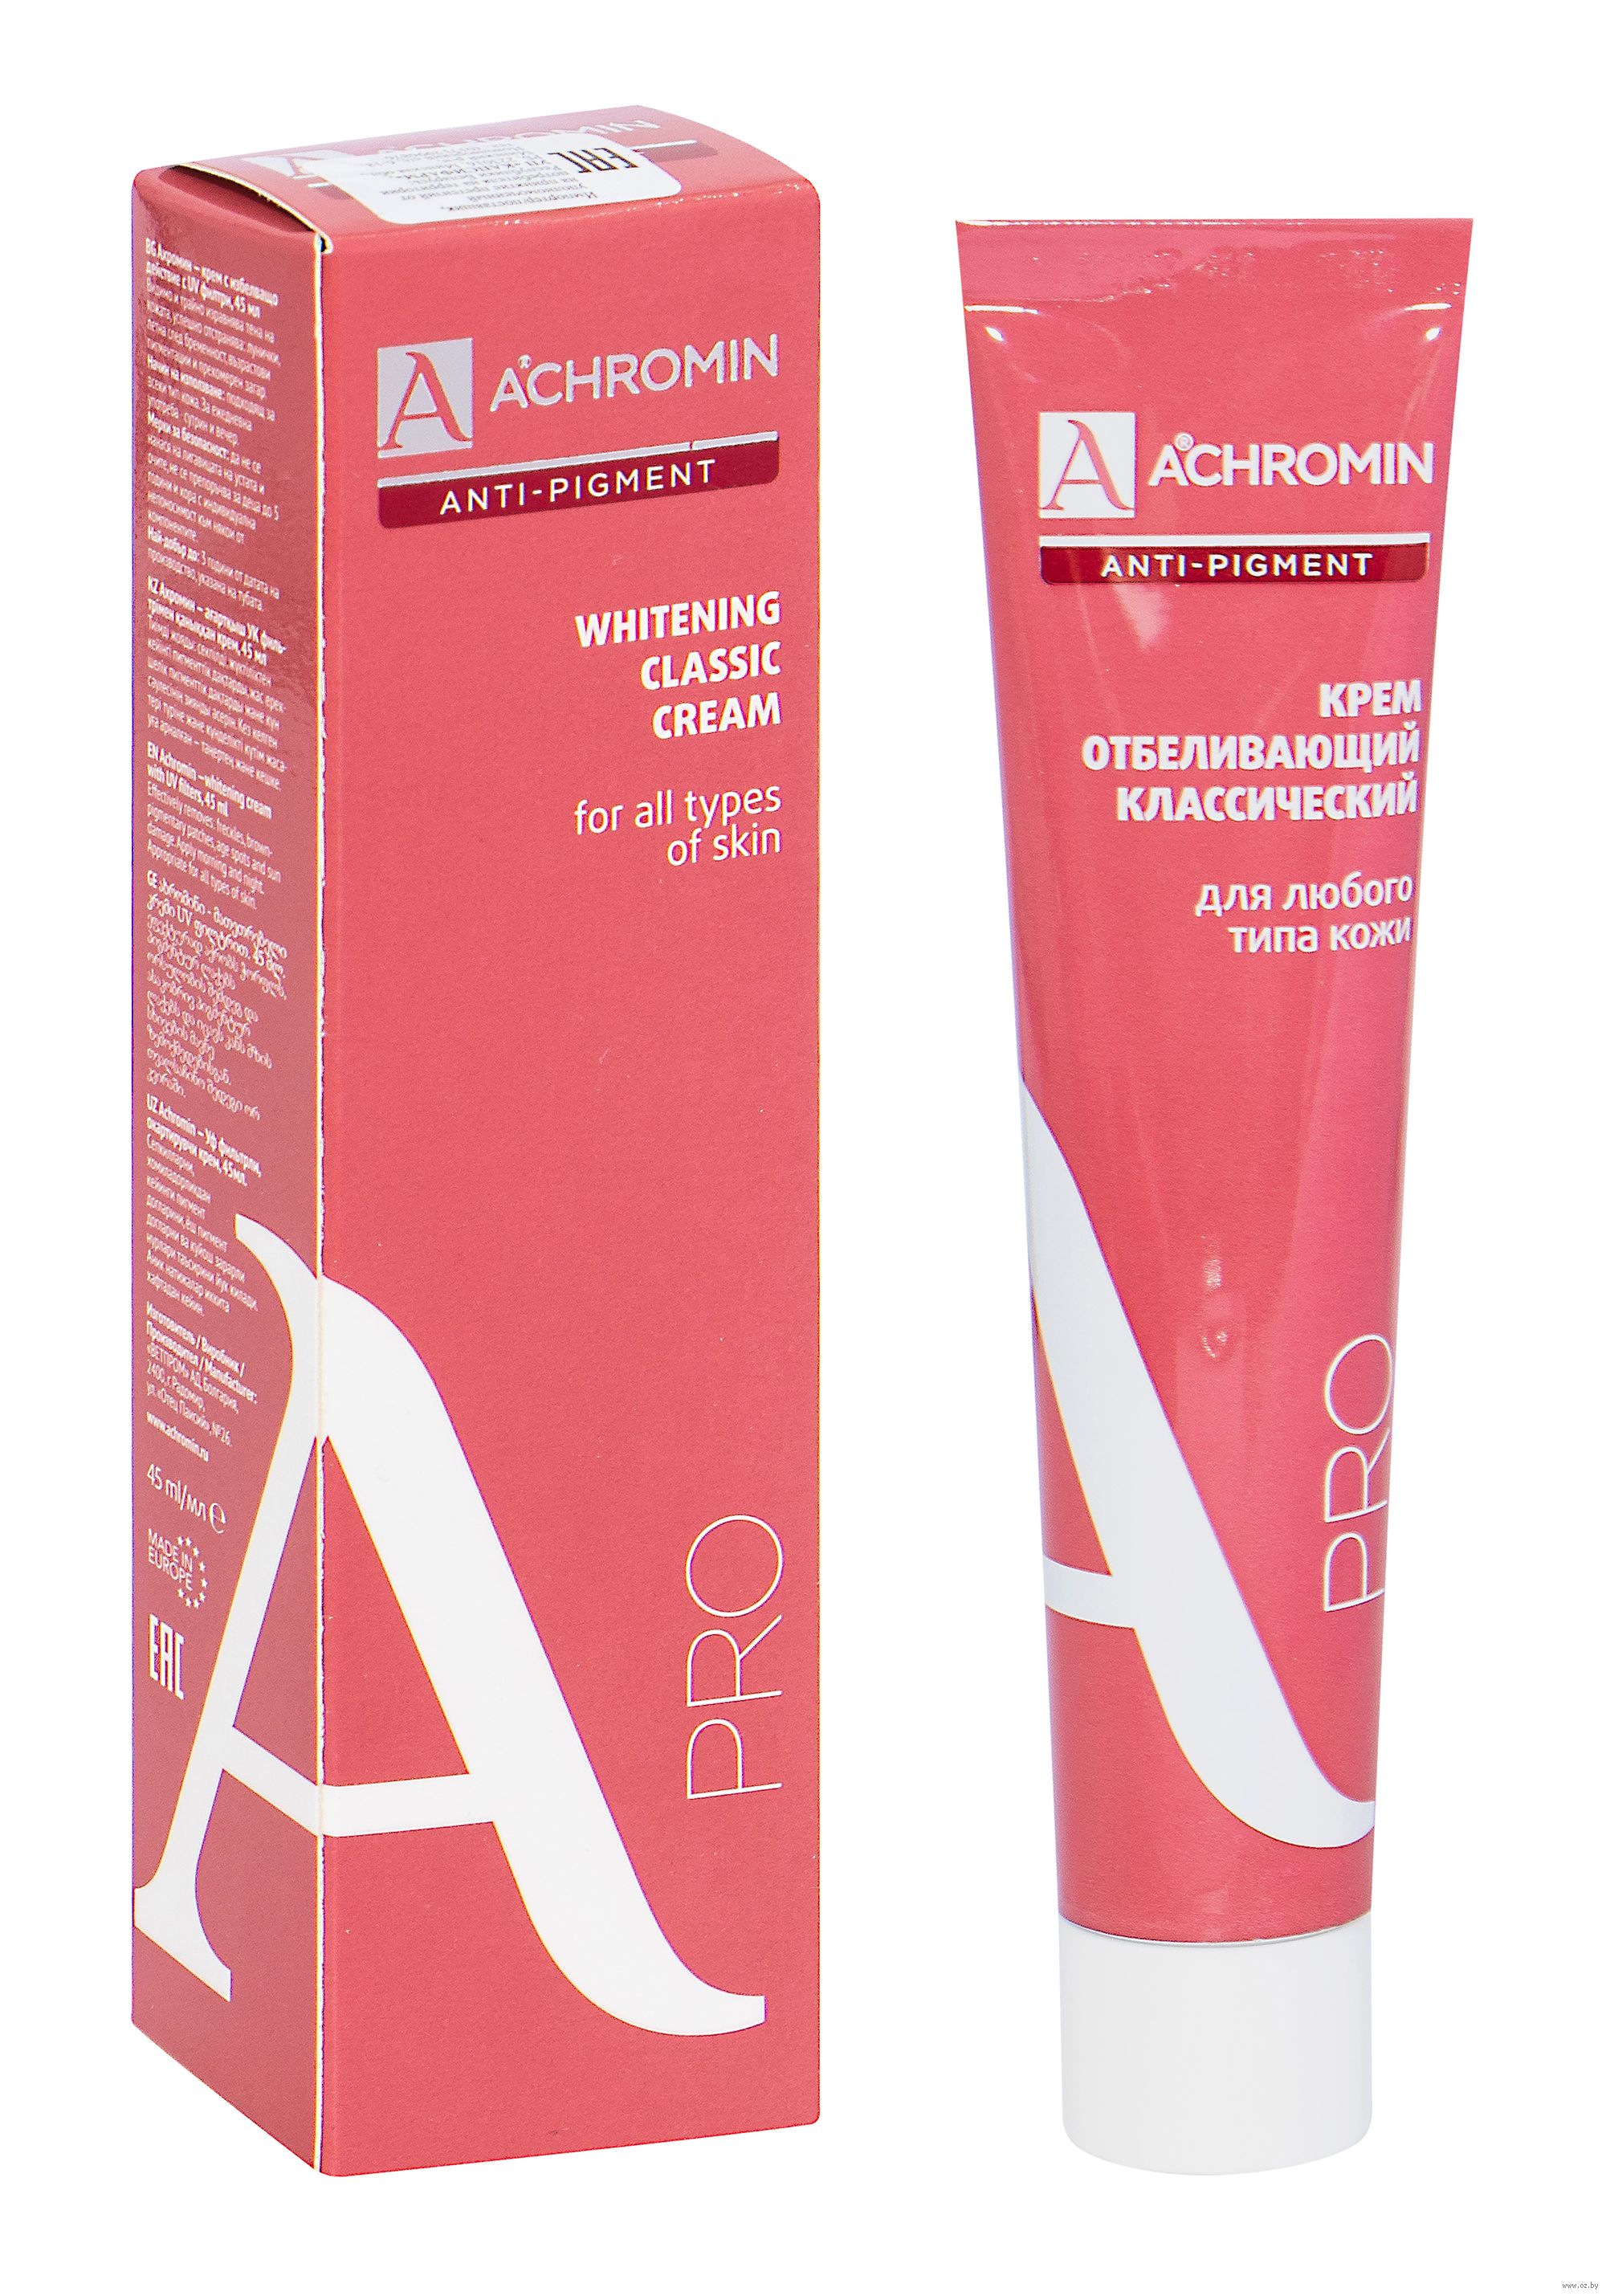 Ахромин крем отбеливающий купить. Ахромин 45 мл. Achromin крем для лица. Ахромин от пигментных. Крем с гидрохиноном ахромин.